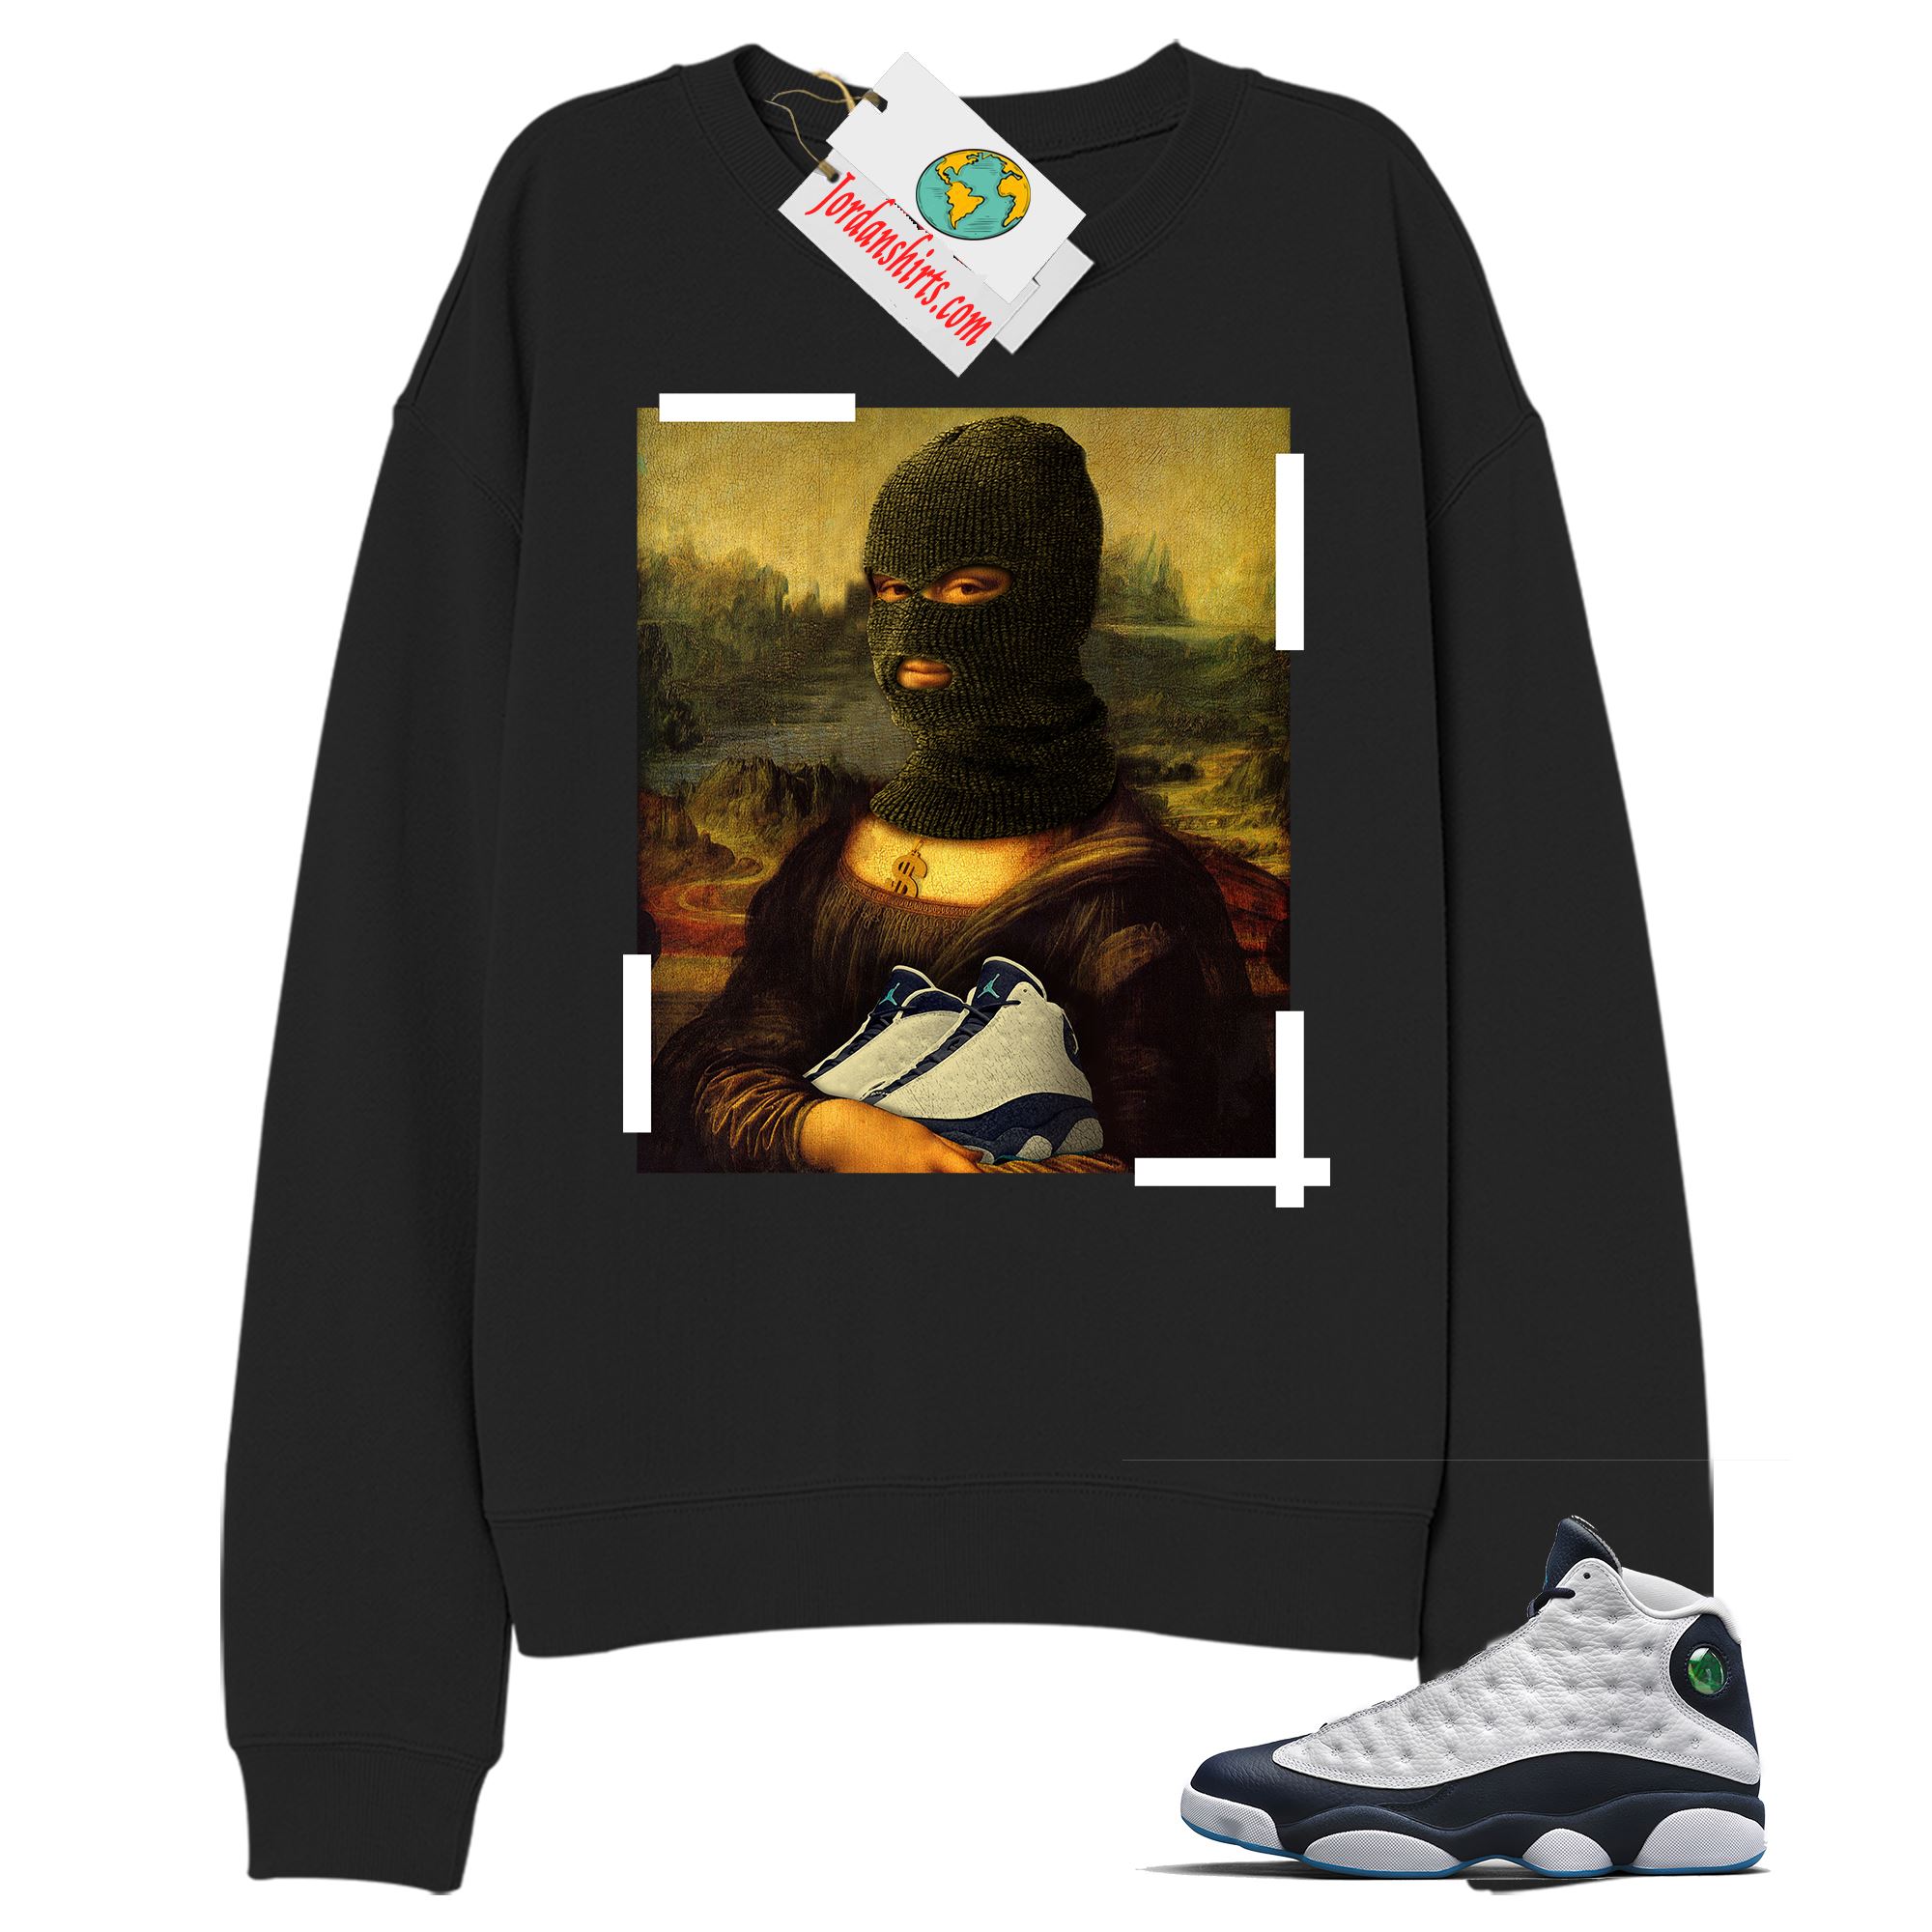 Jordan 13 Sweatshirt, Off White Mona Lisa Black Sweatshirt Air Jordan 13 Obsidian 13s Full Size Up To 5xl